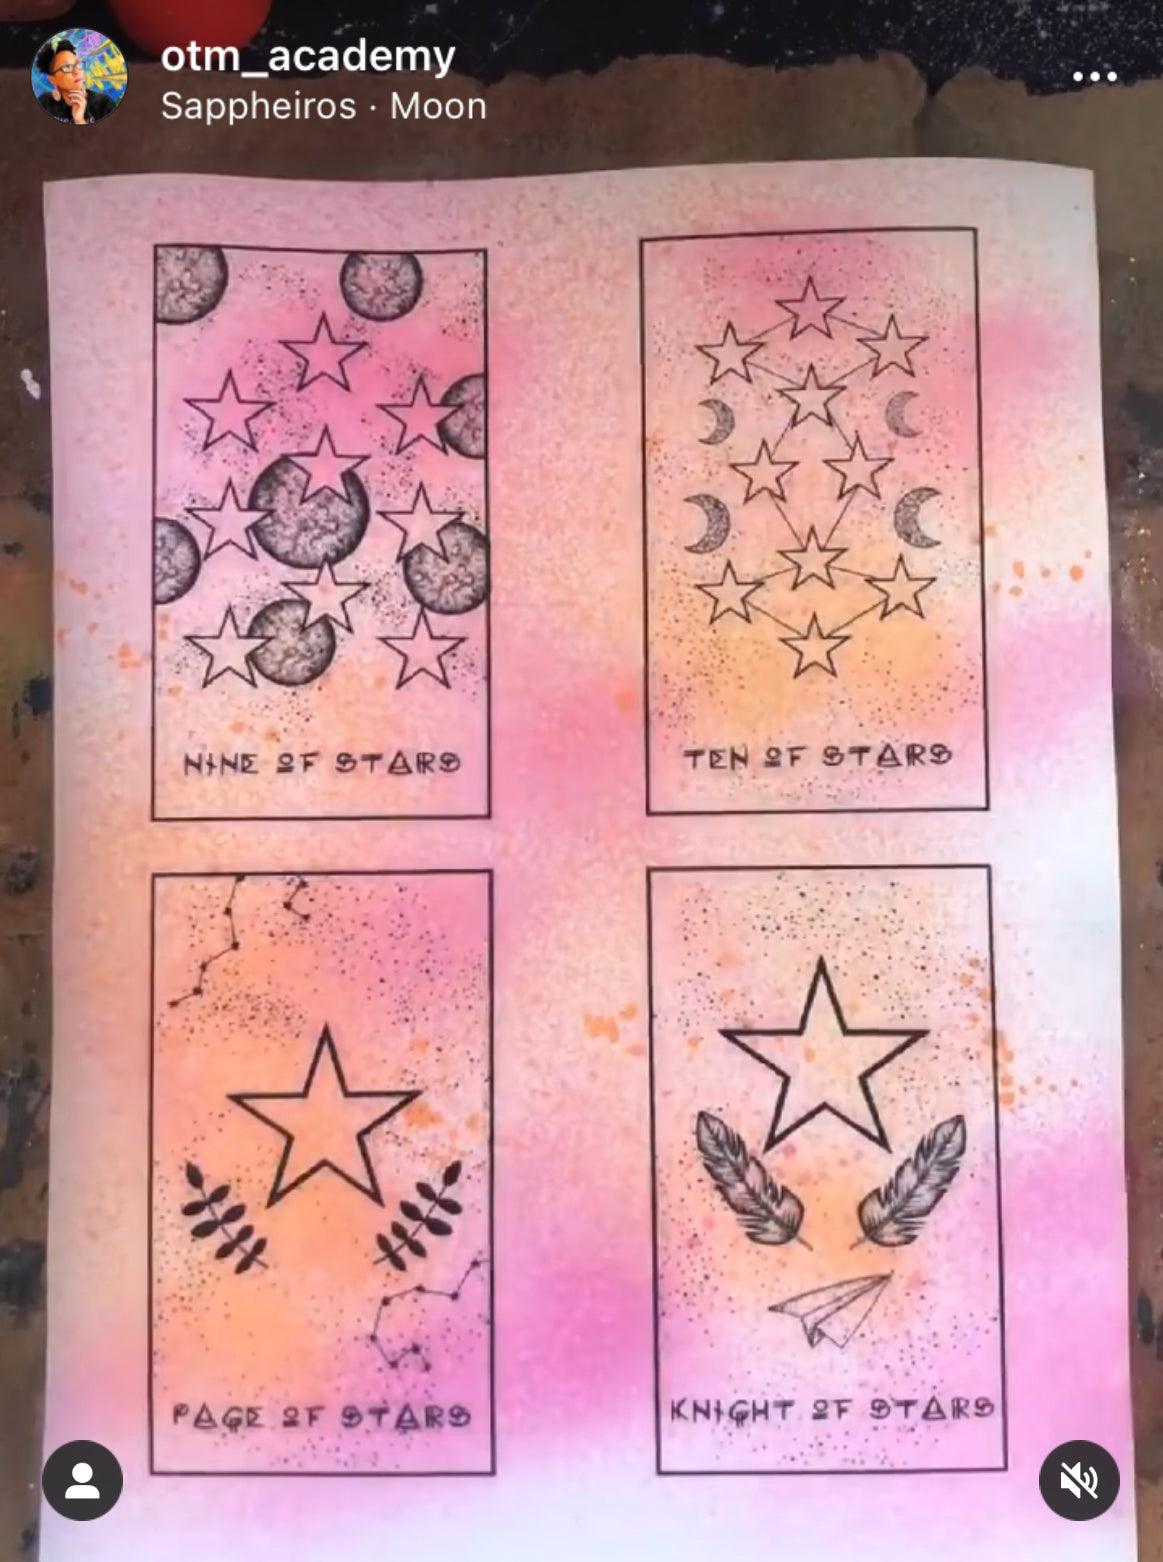 digital tarot deck: the lunar wanderer 78 card hand illustrated printable deck